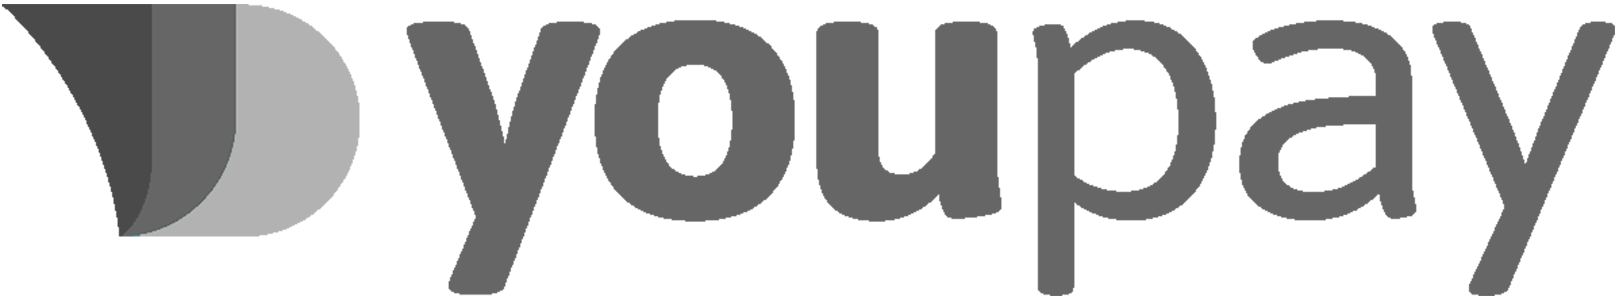 YouPay Logo